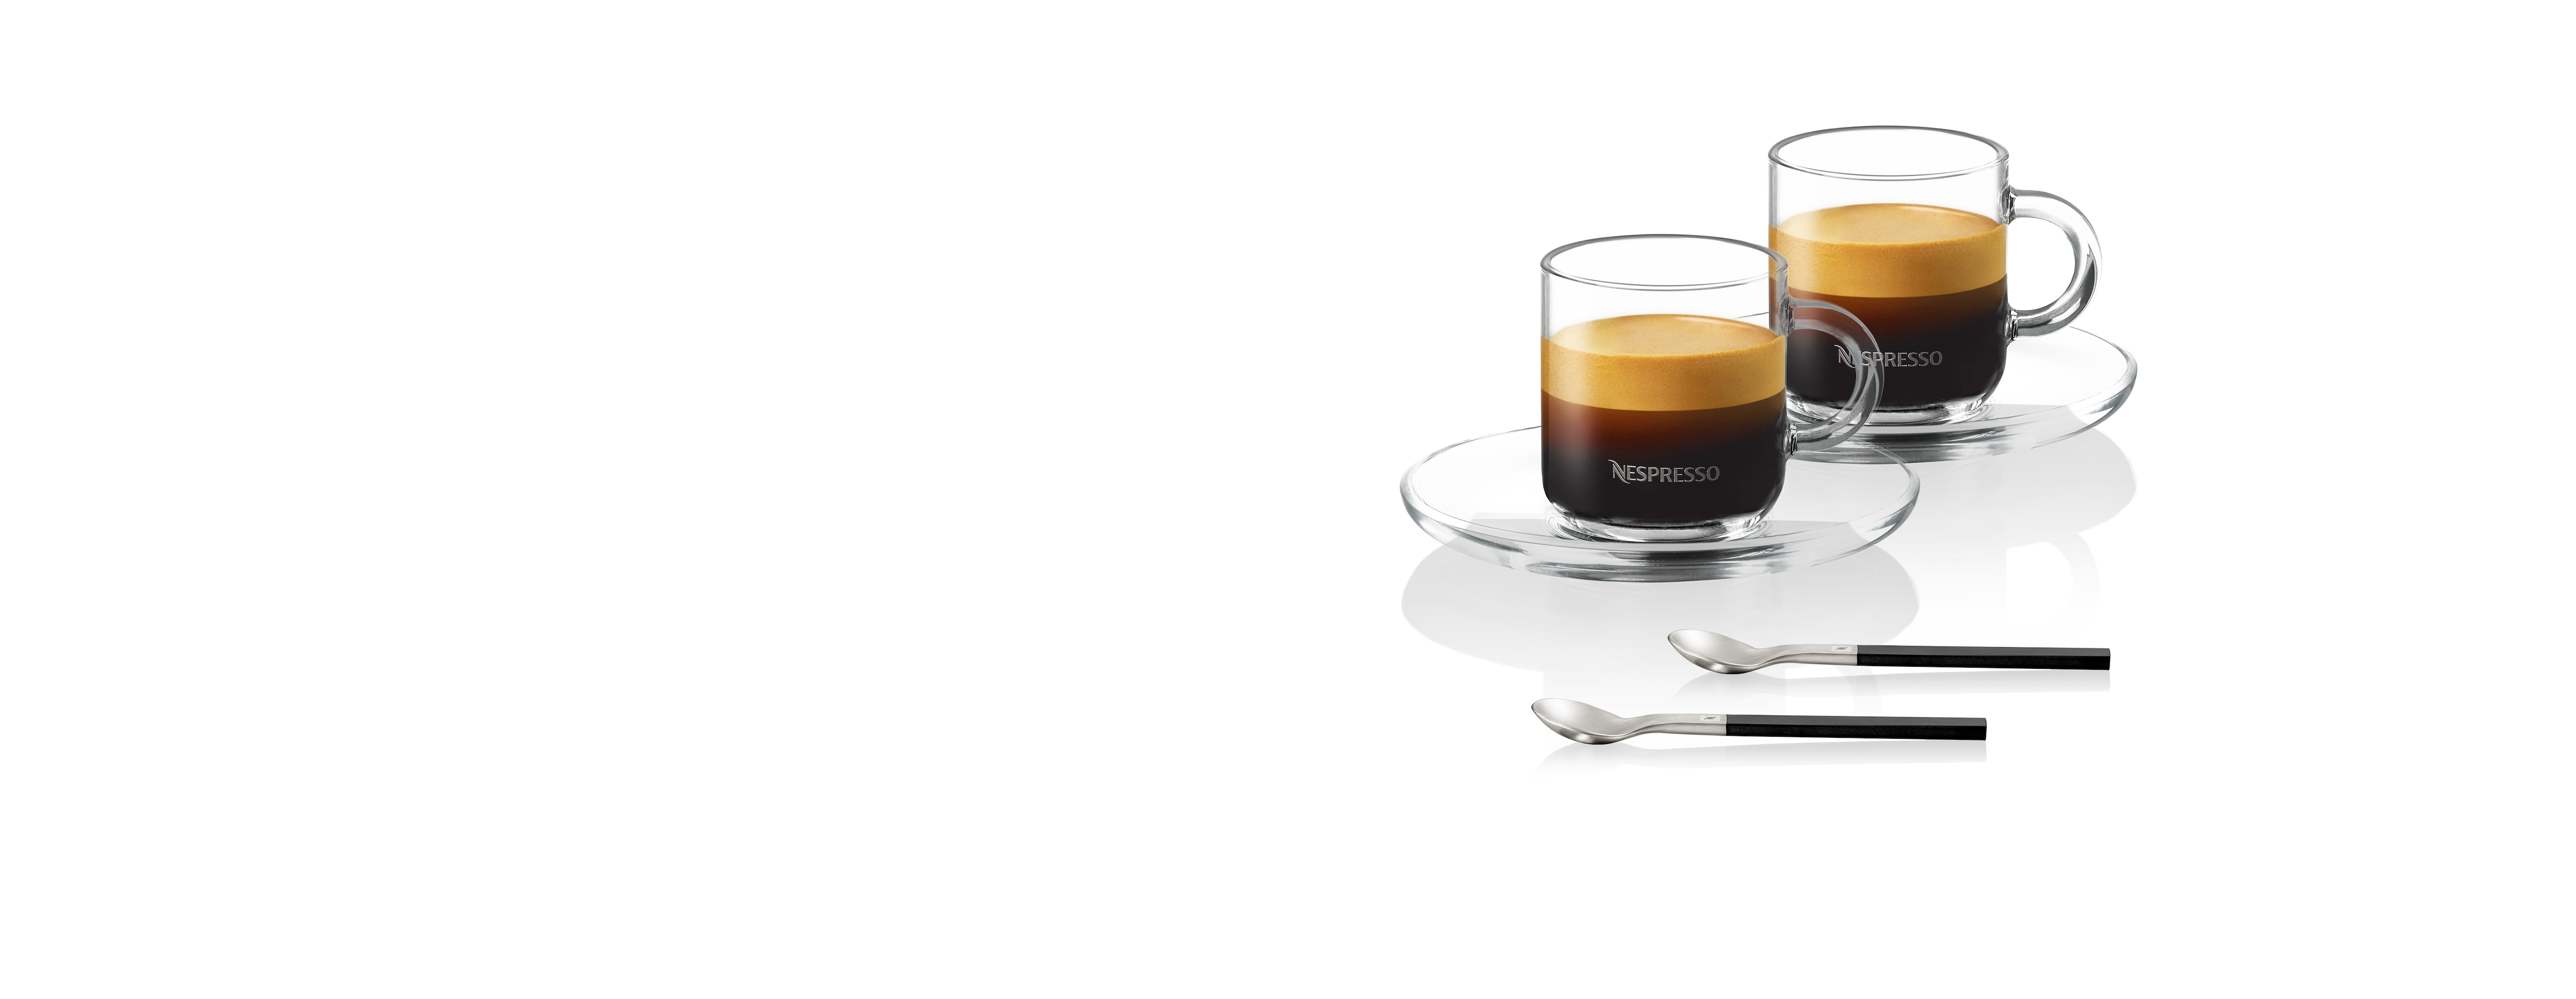 REVIEW: View Collection  Nespresso Espresso Glassware 